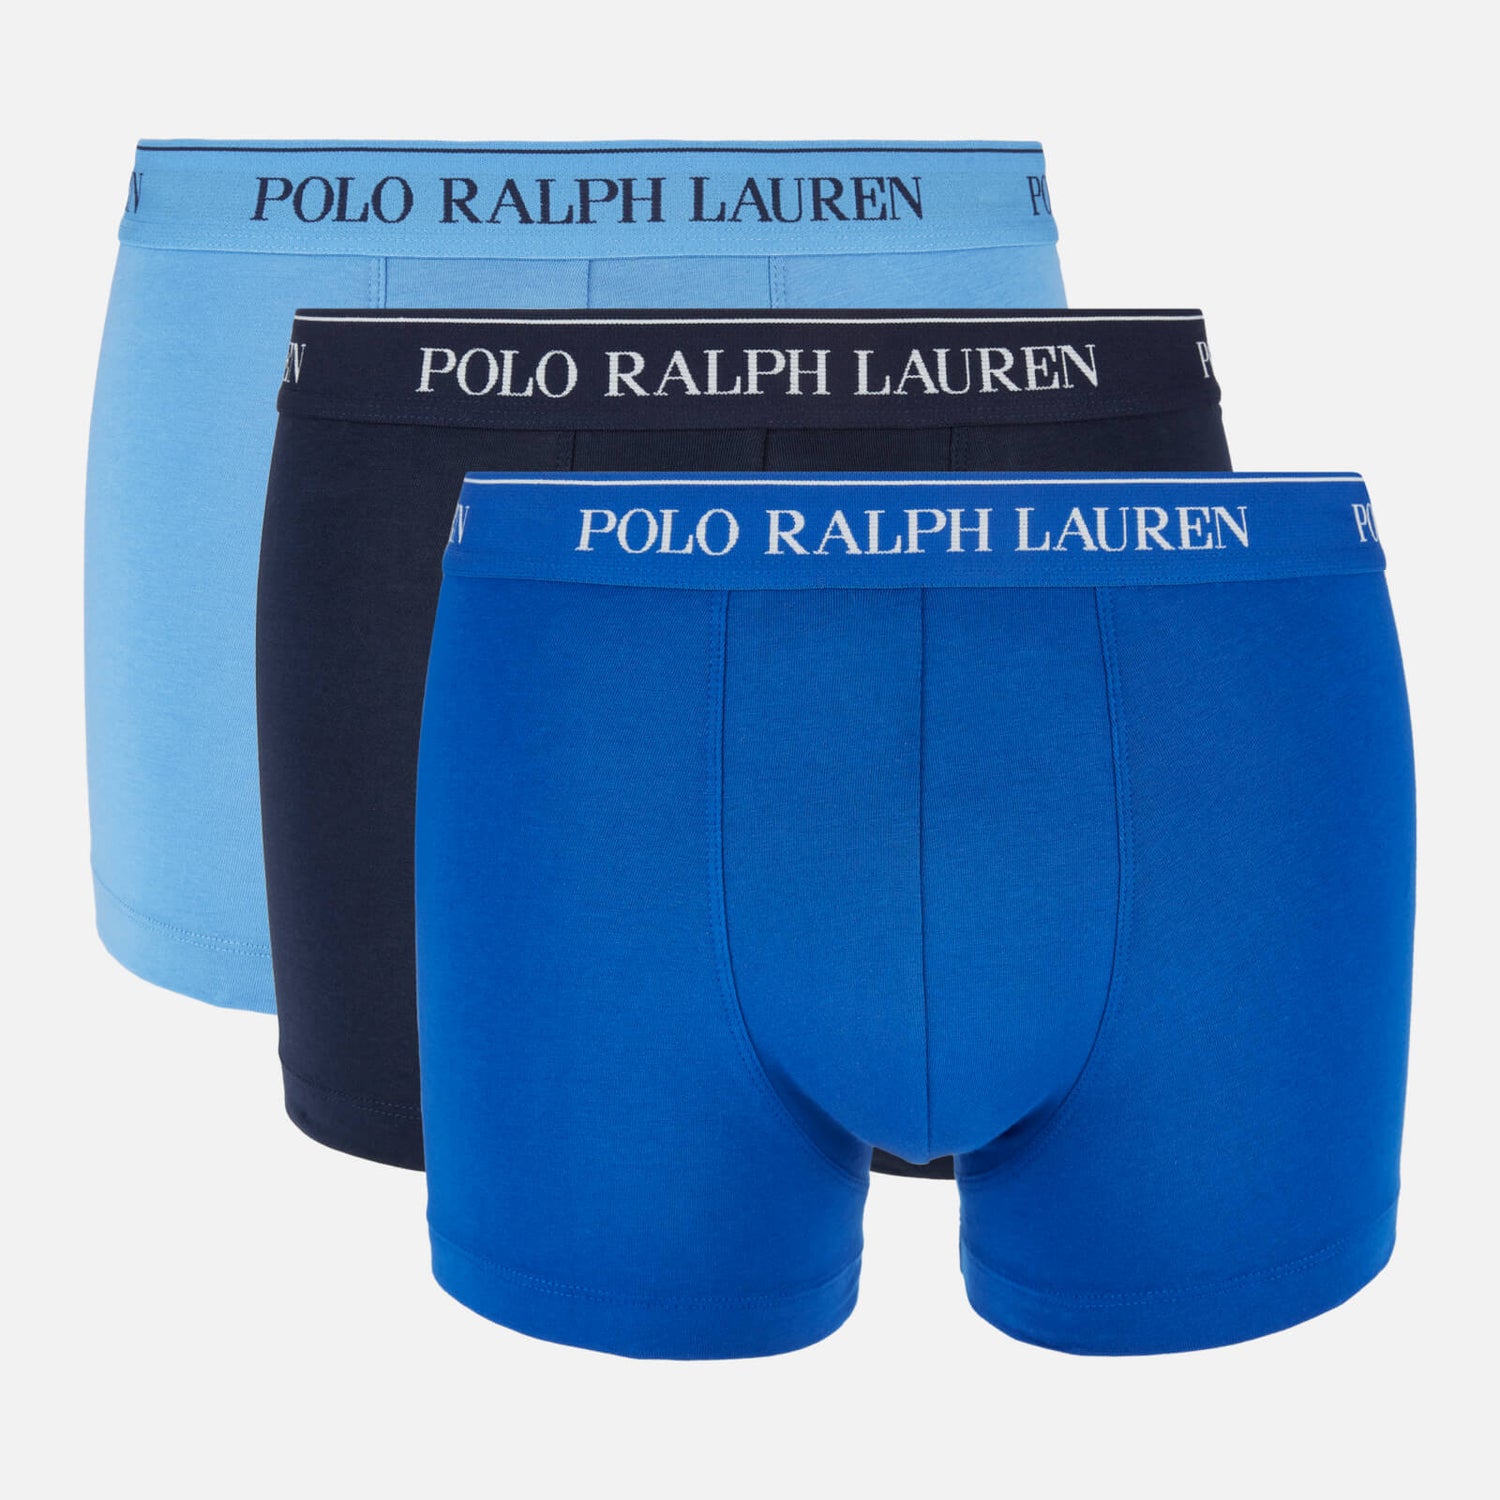 Polo Ralph Lauren Men's Classic 3 Pack Trunks - Cruise Navy/Saphire Star/Bermuda Blue - XXL